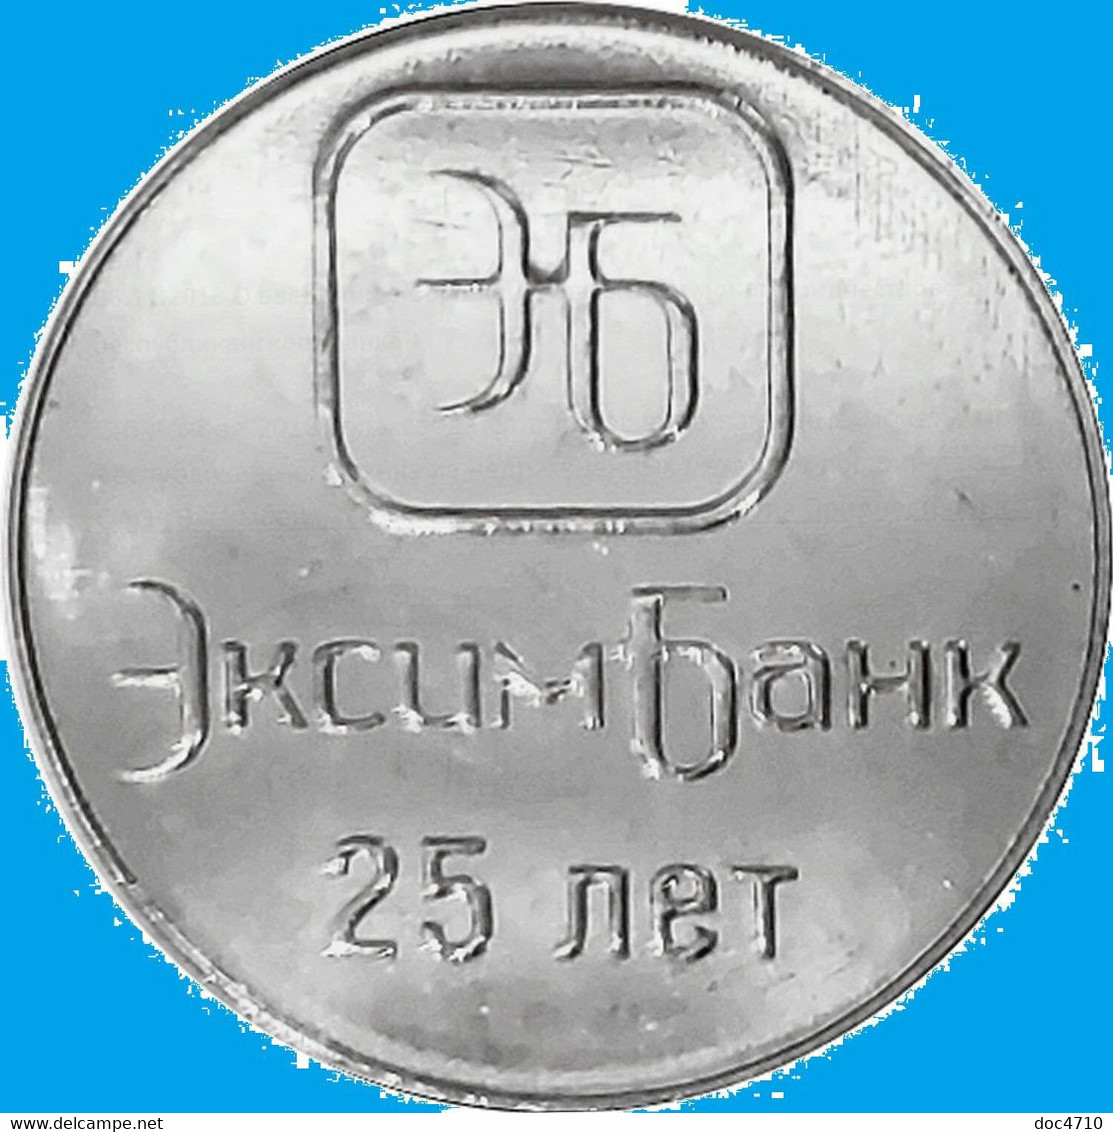 Moldova-Transnistria 1 Ruble 2018, 25 Years Eximbank, KM#New, Unc - Moldova